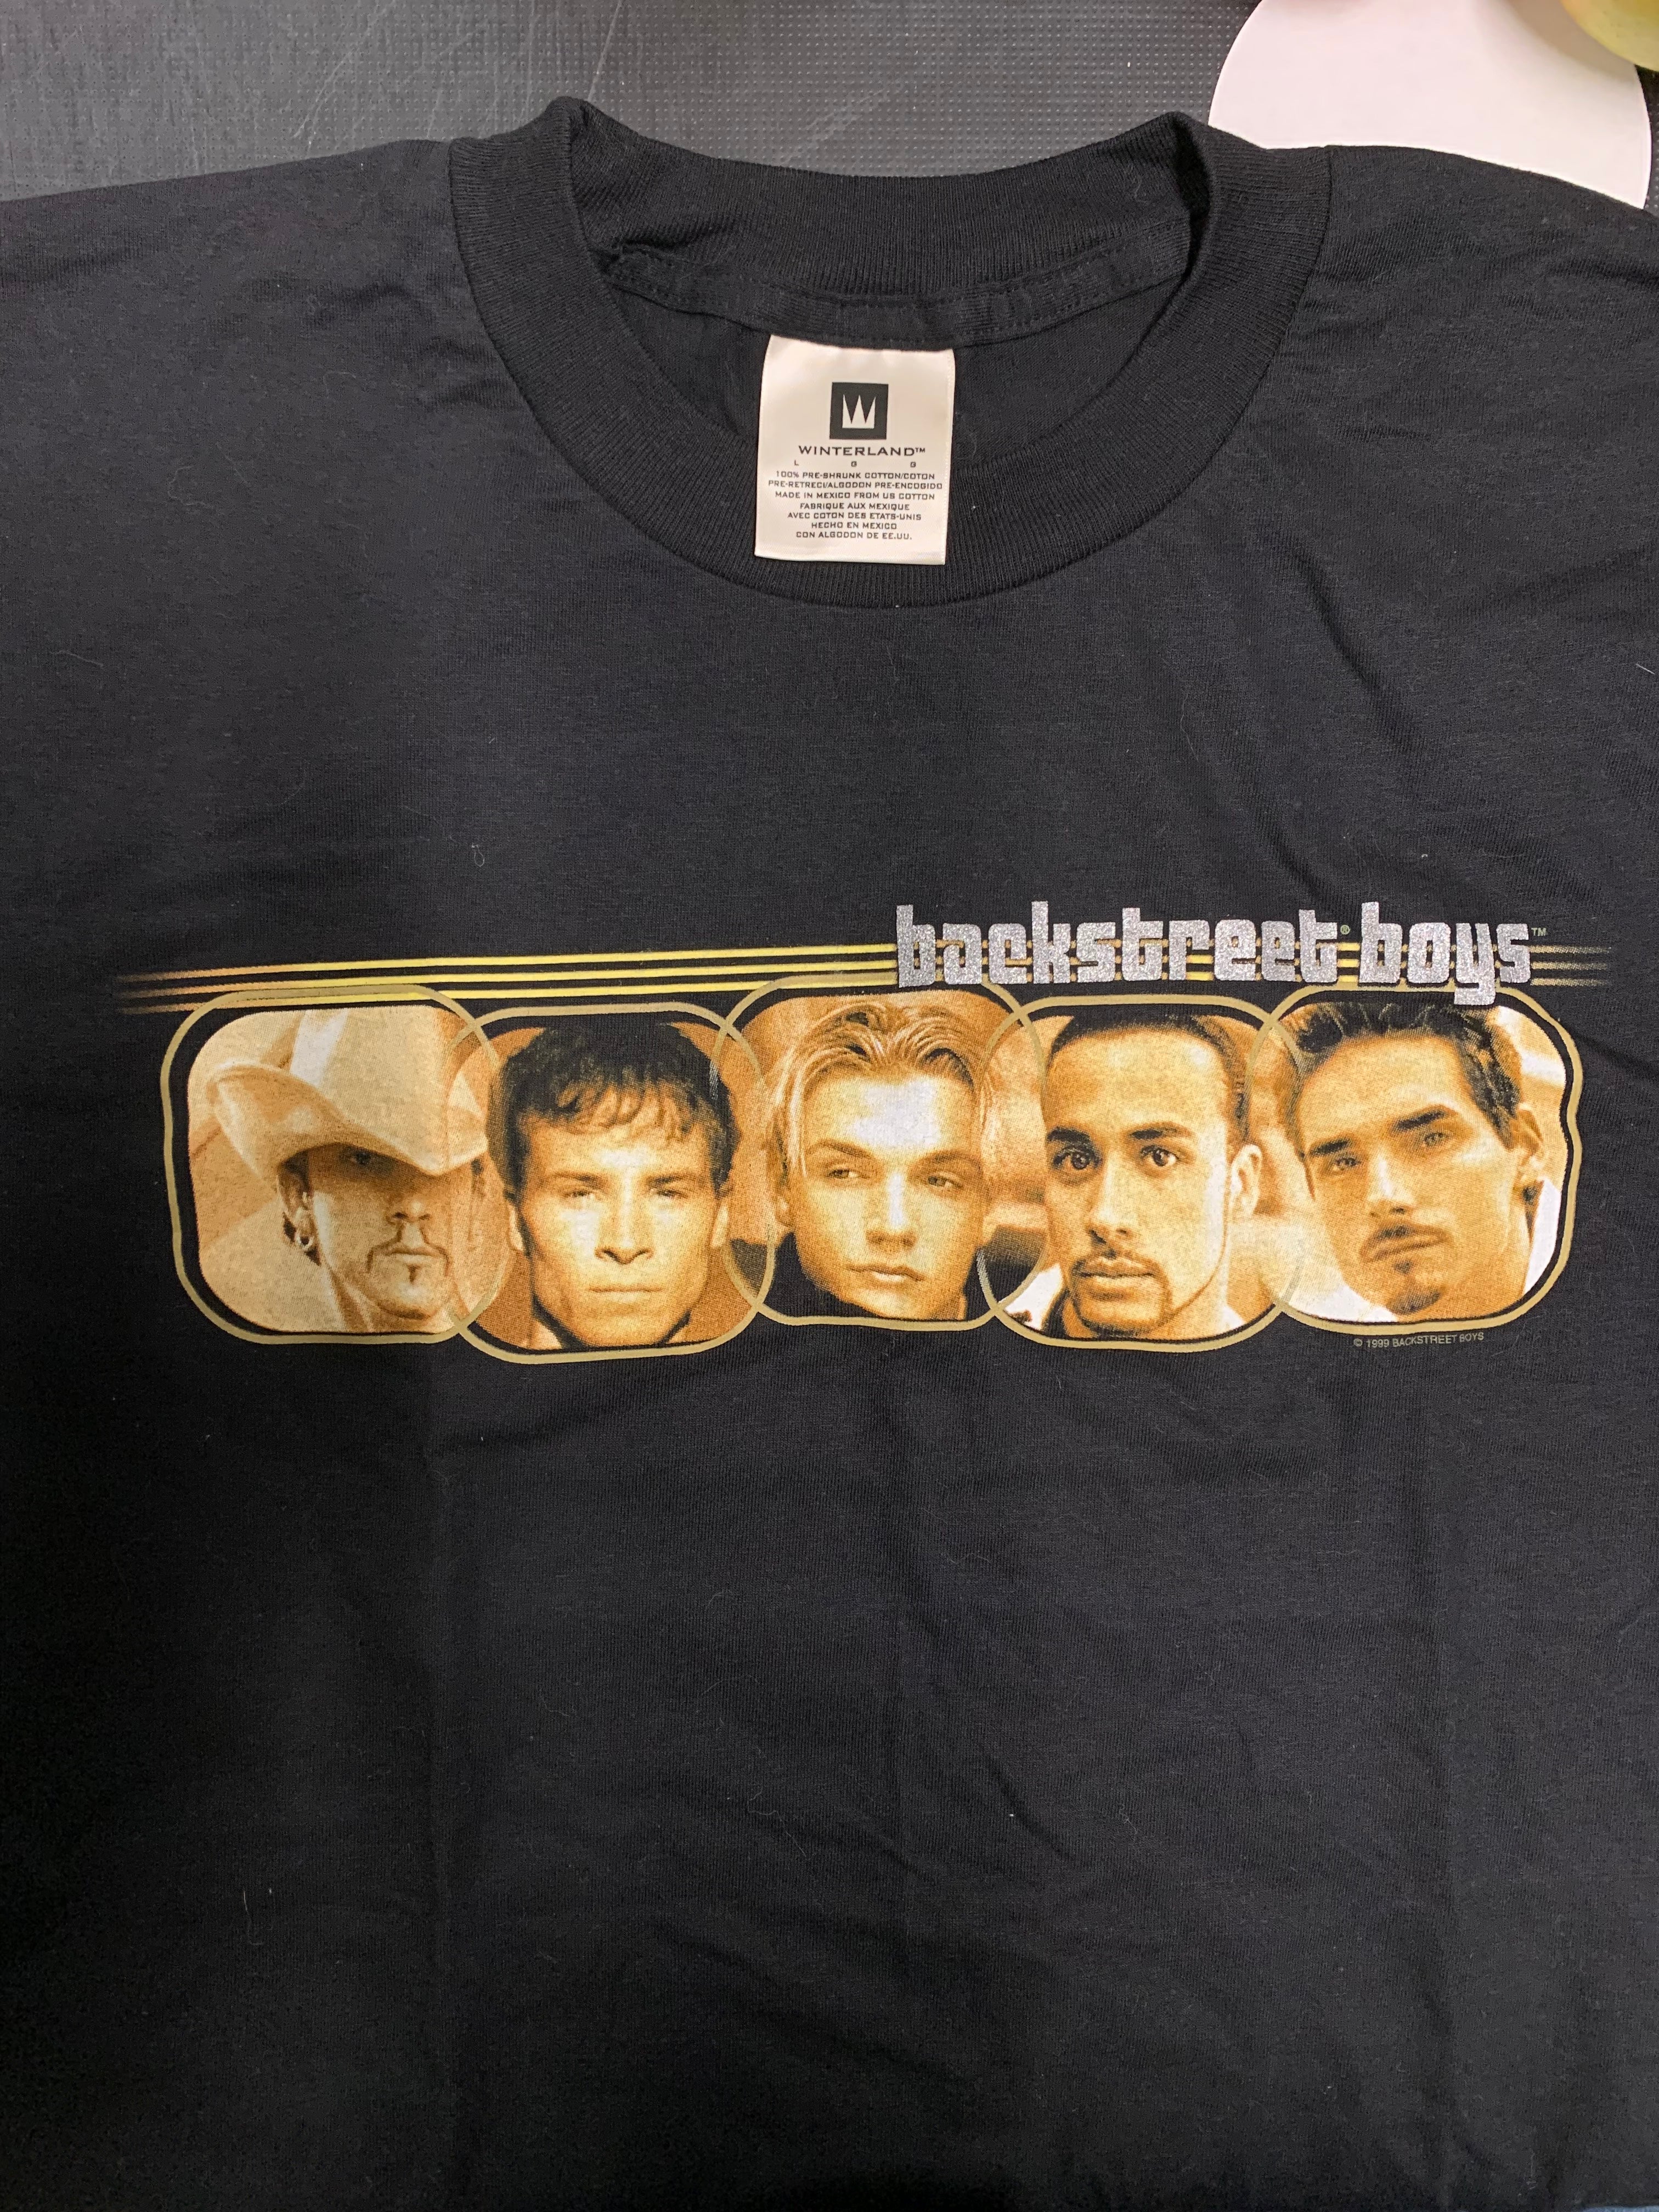 Backstreet Boys Headshot T-Shirt (1999), Black, L